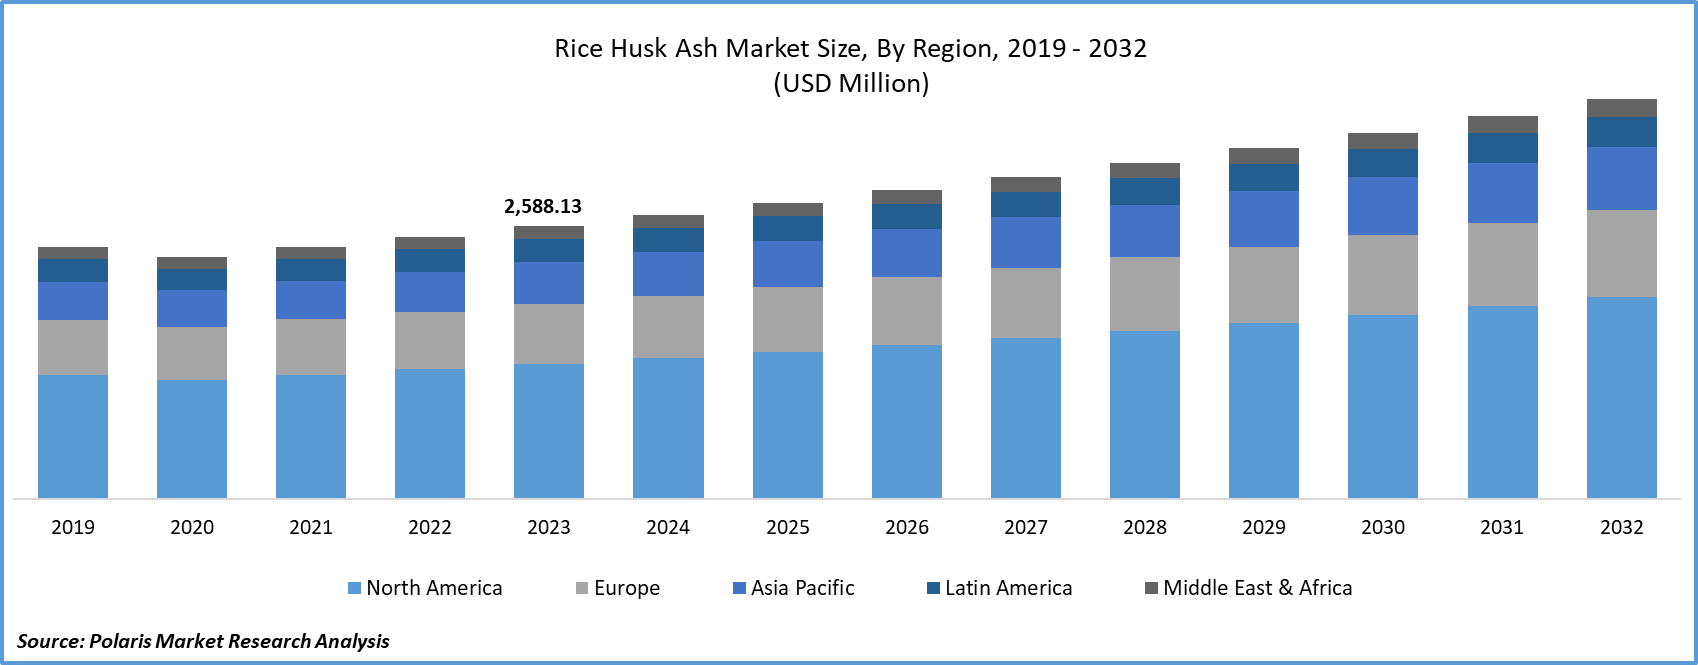 Rice Husk Ash Market Size